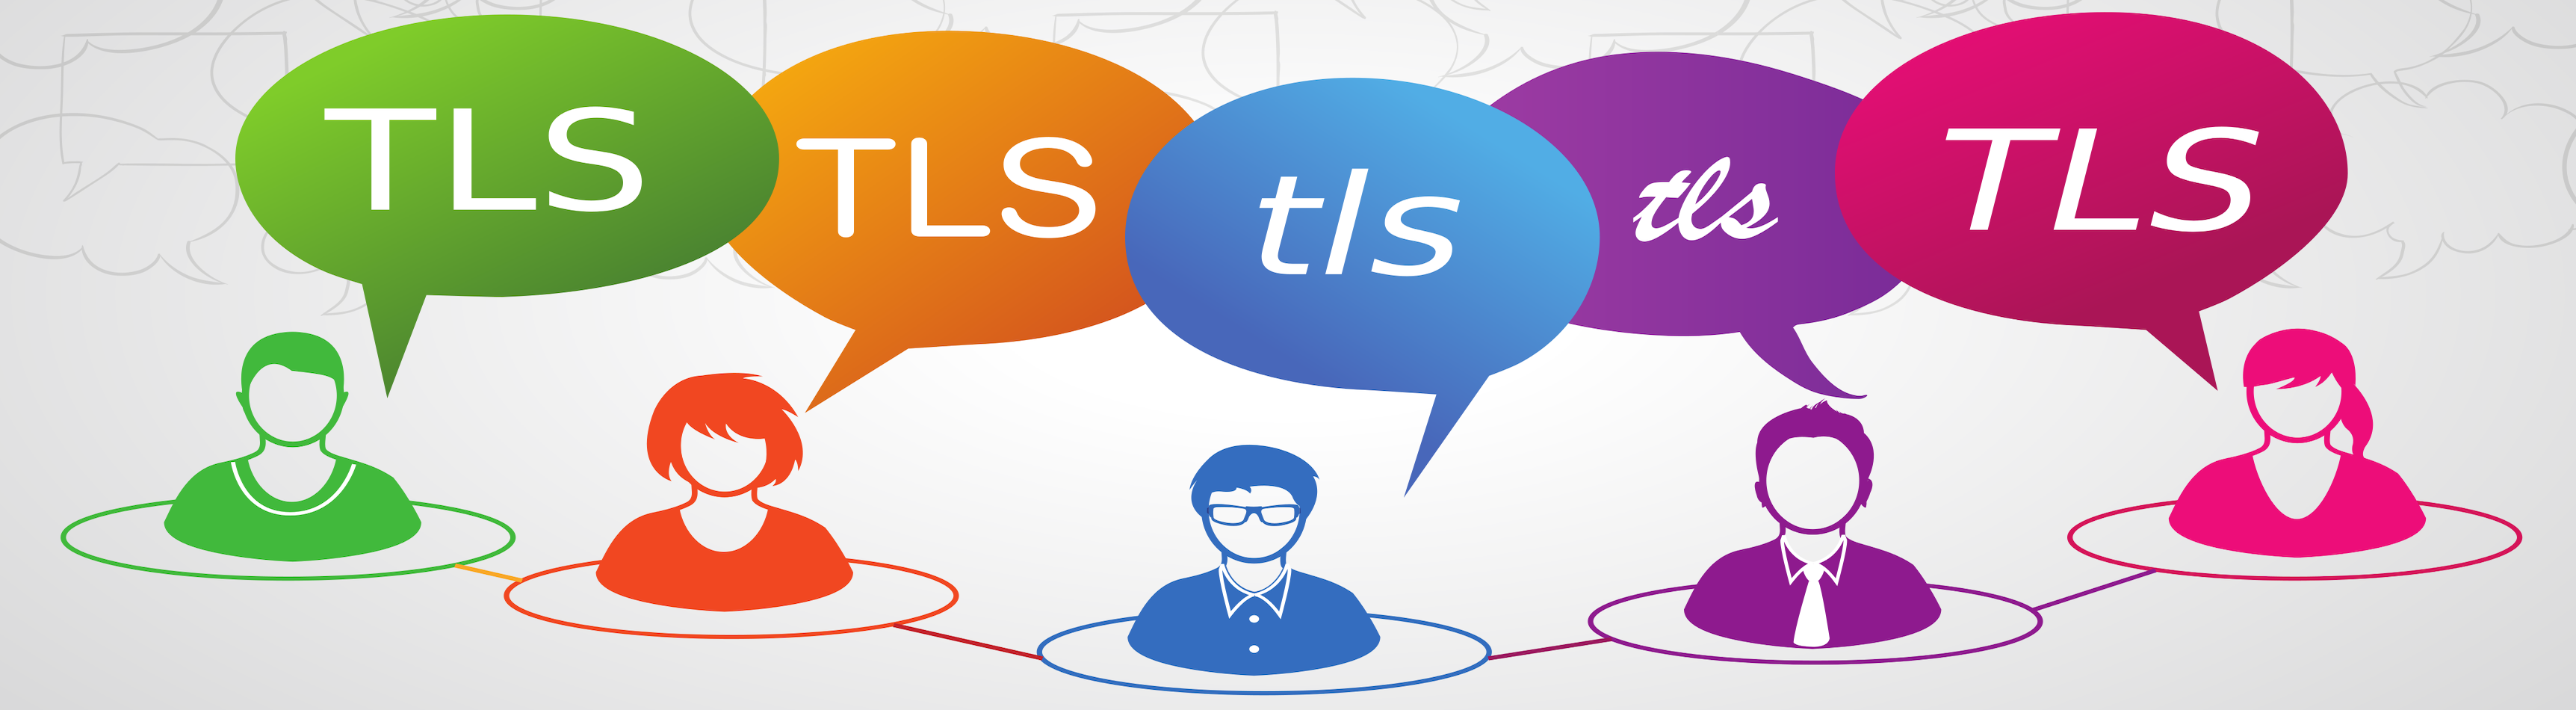 Greate minds agree on TLS